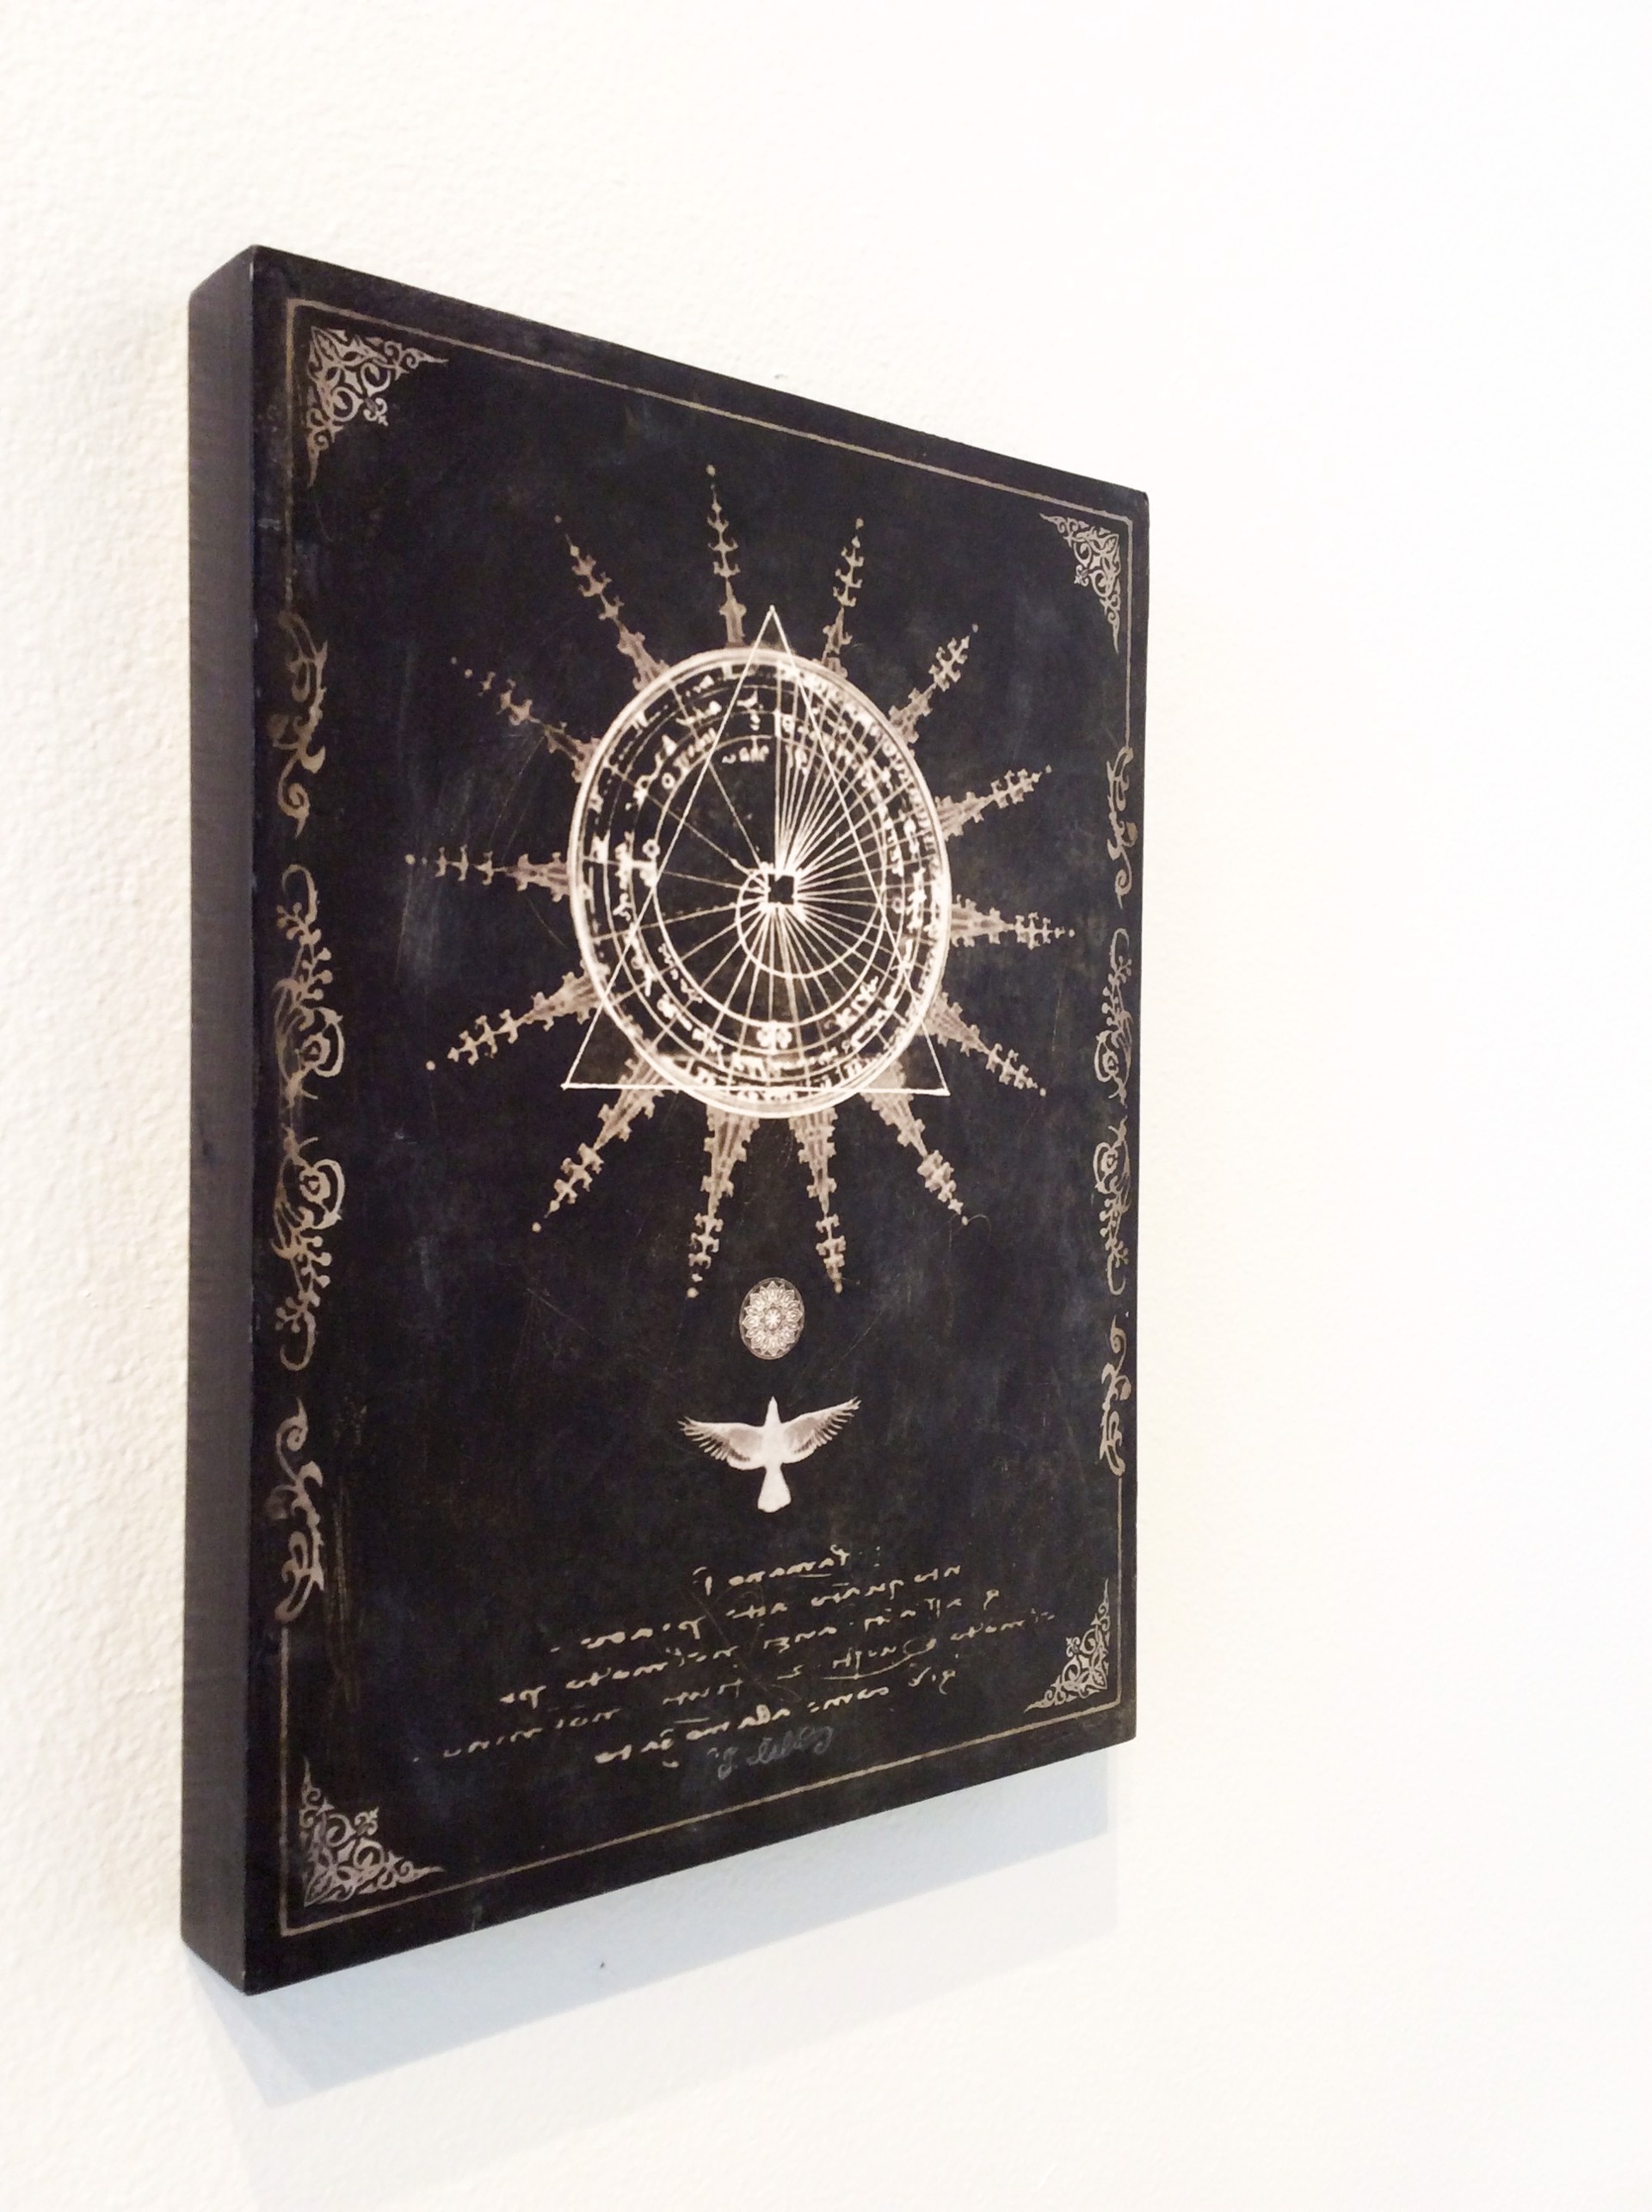 Book of the Sun (akashic records) by Yuko Ishii